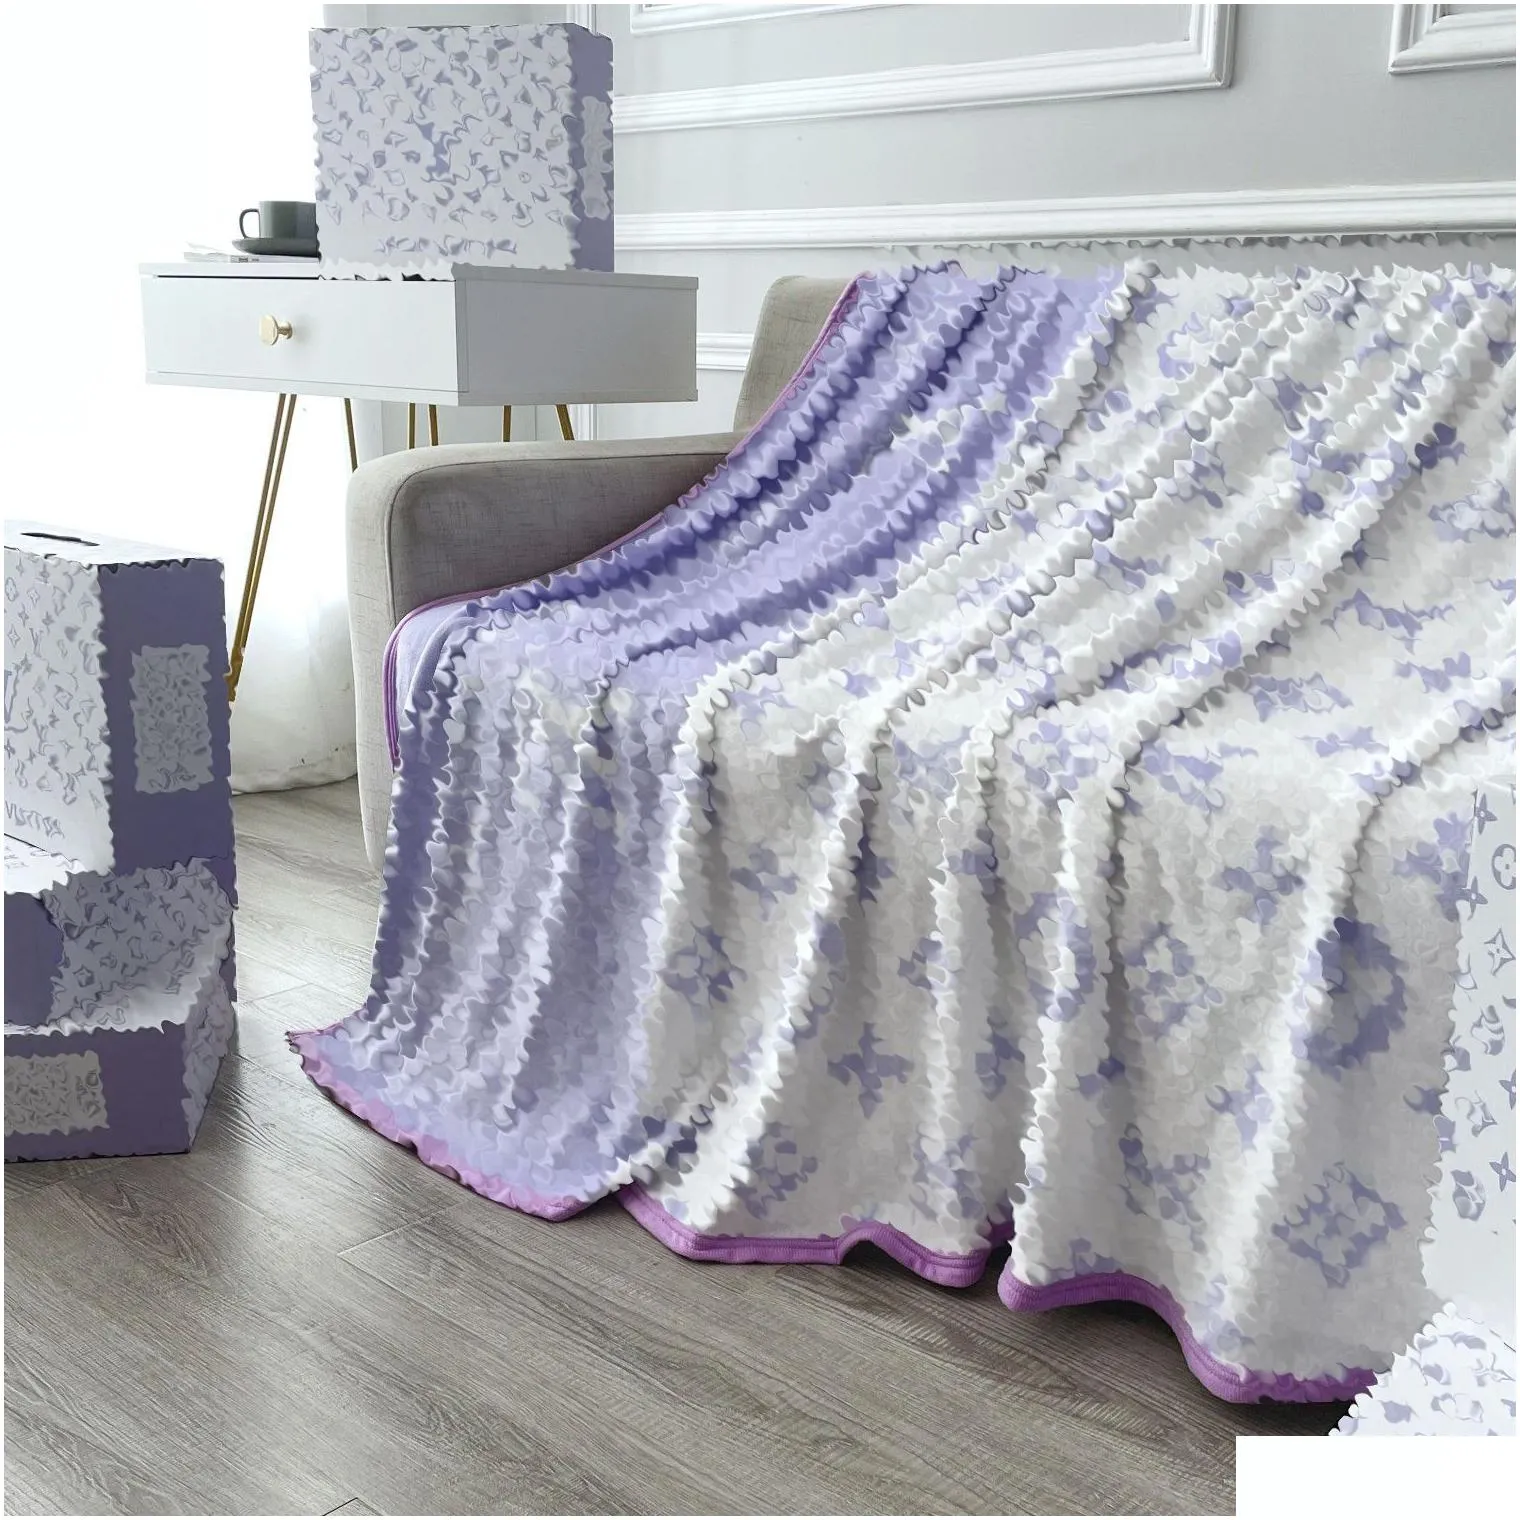 Designer Blanket 150X200cm Brand Letter L Air Fashion Conditioning Travel Bath Towel Soft Winter Fleece Shawl Throw Blankets HT1521